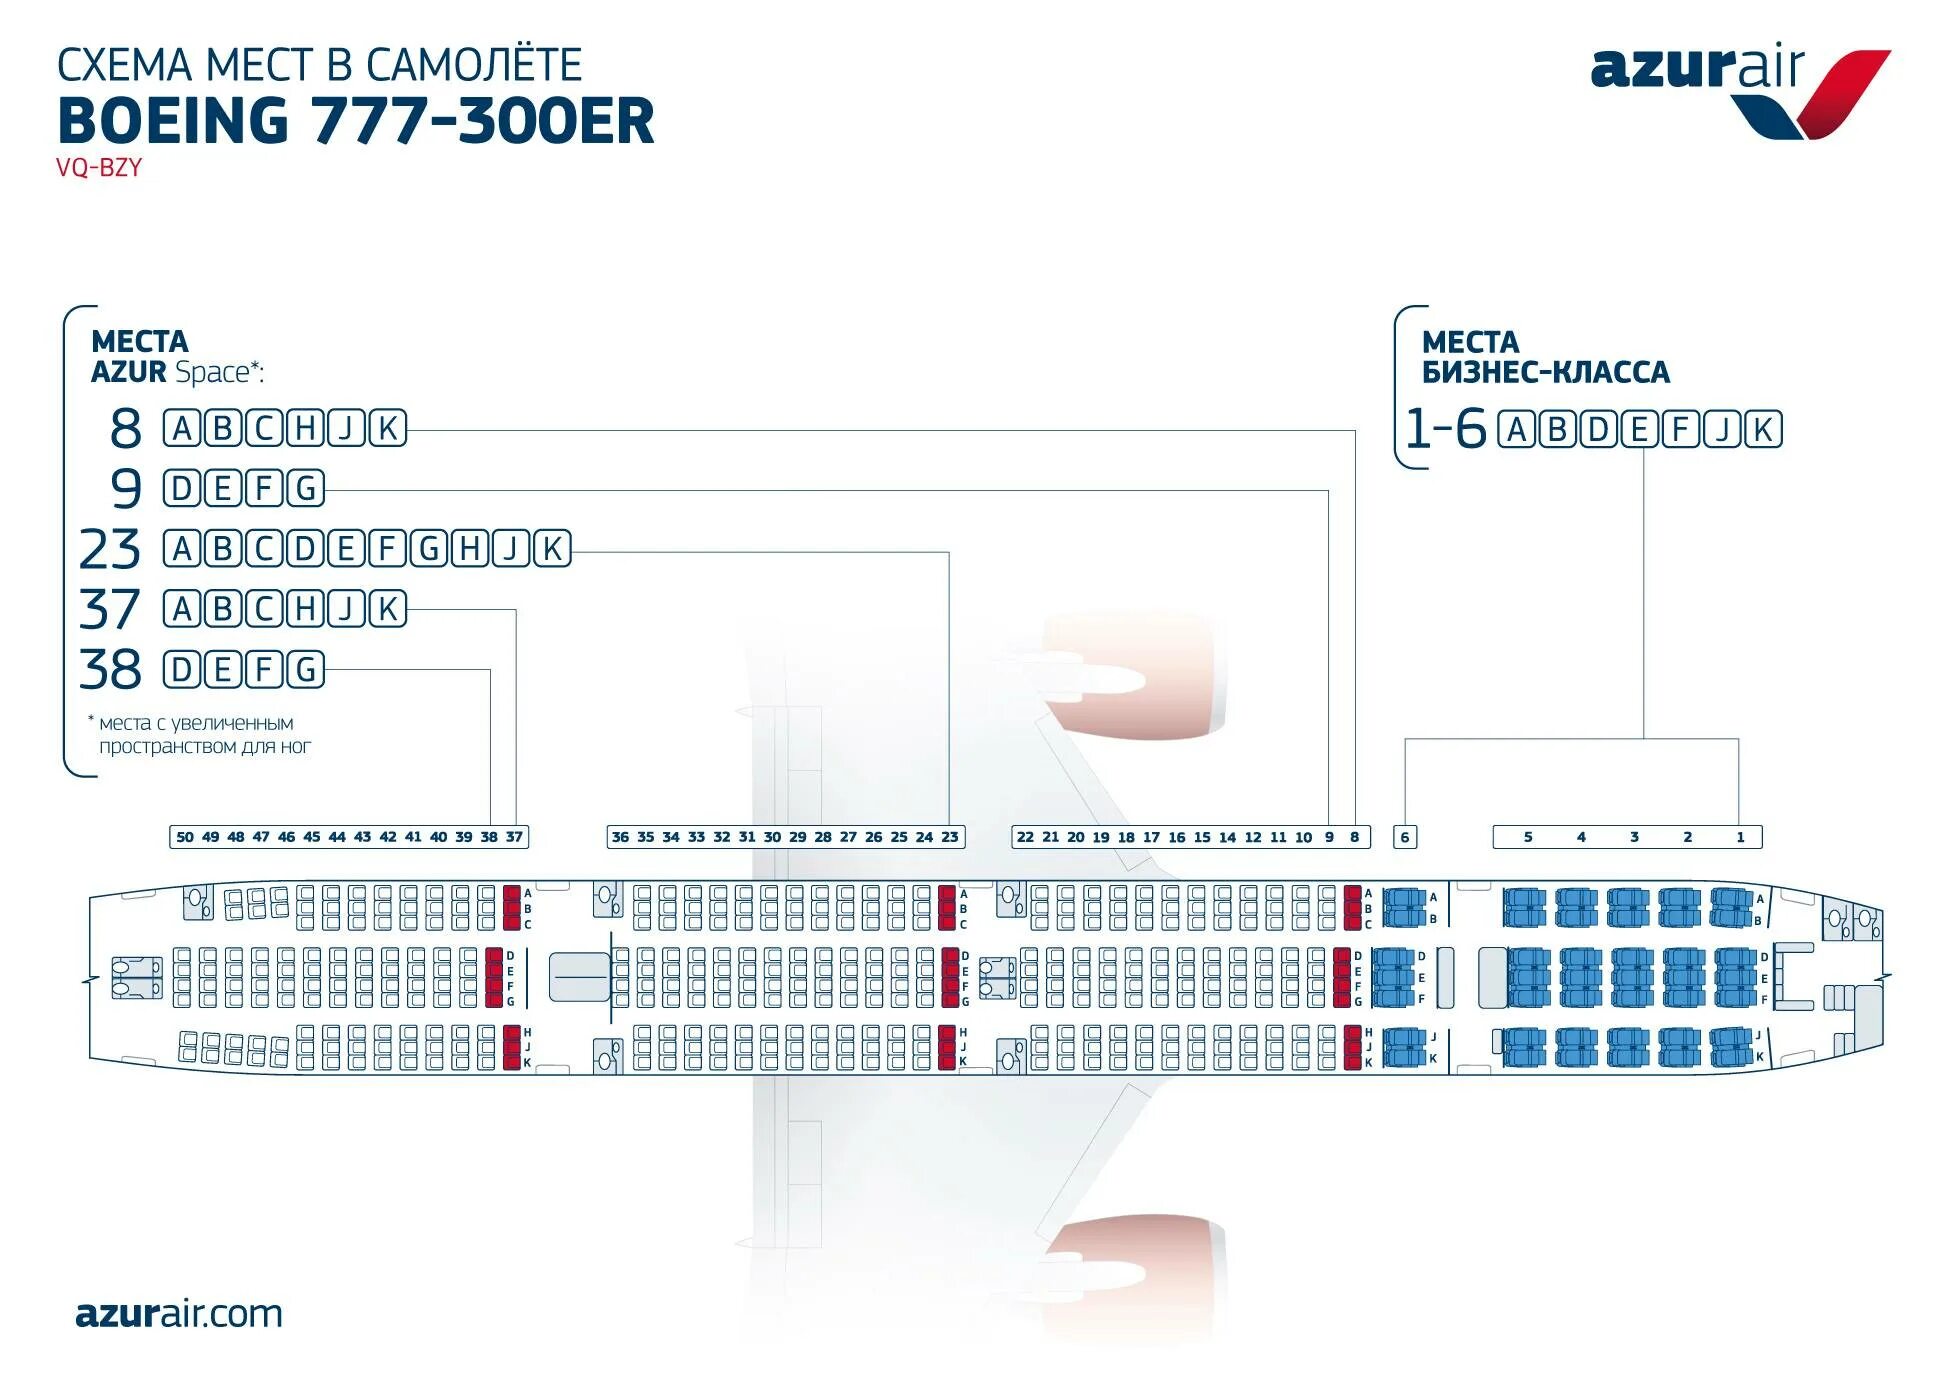 Boeing 777 расположение. Боинг 777 300 Россия расположение мест в салоне. Boeing 777-300er схема салона Аэрофлот. Боинг 777 Аэрофлот схема салона лучшие места. Боинг 767 схема посадочных мест Azur Air.